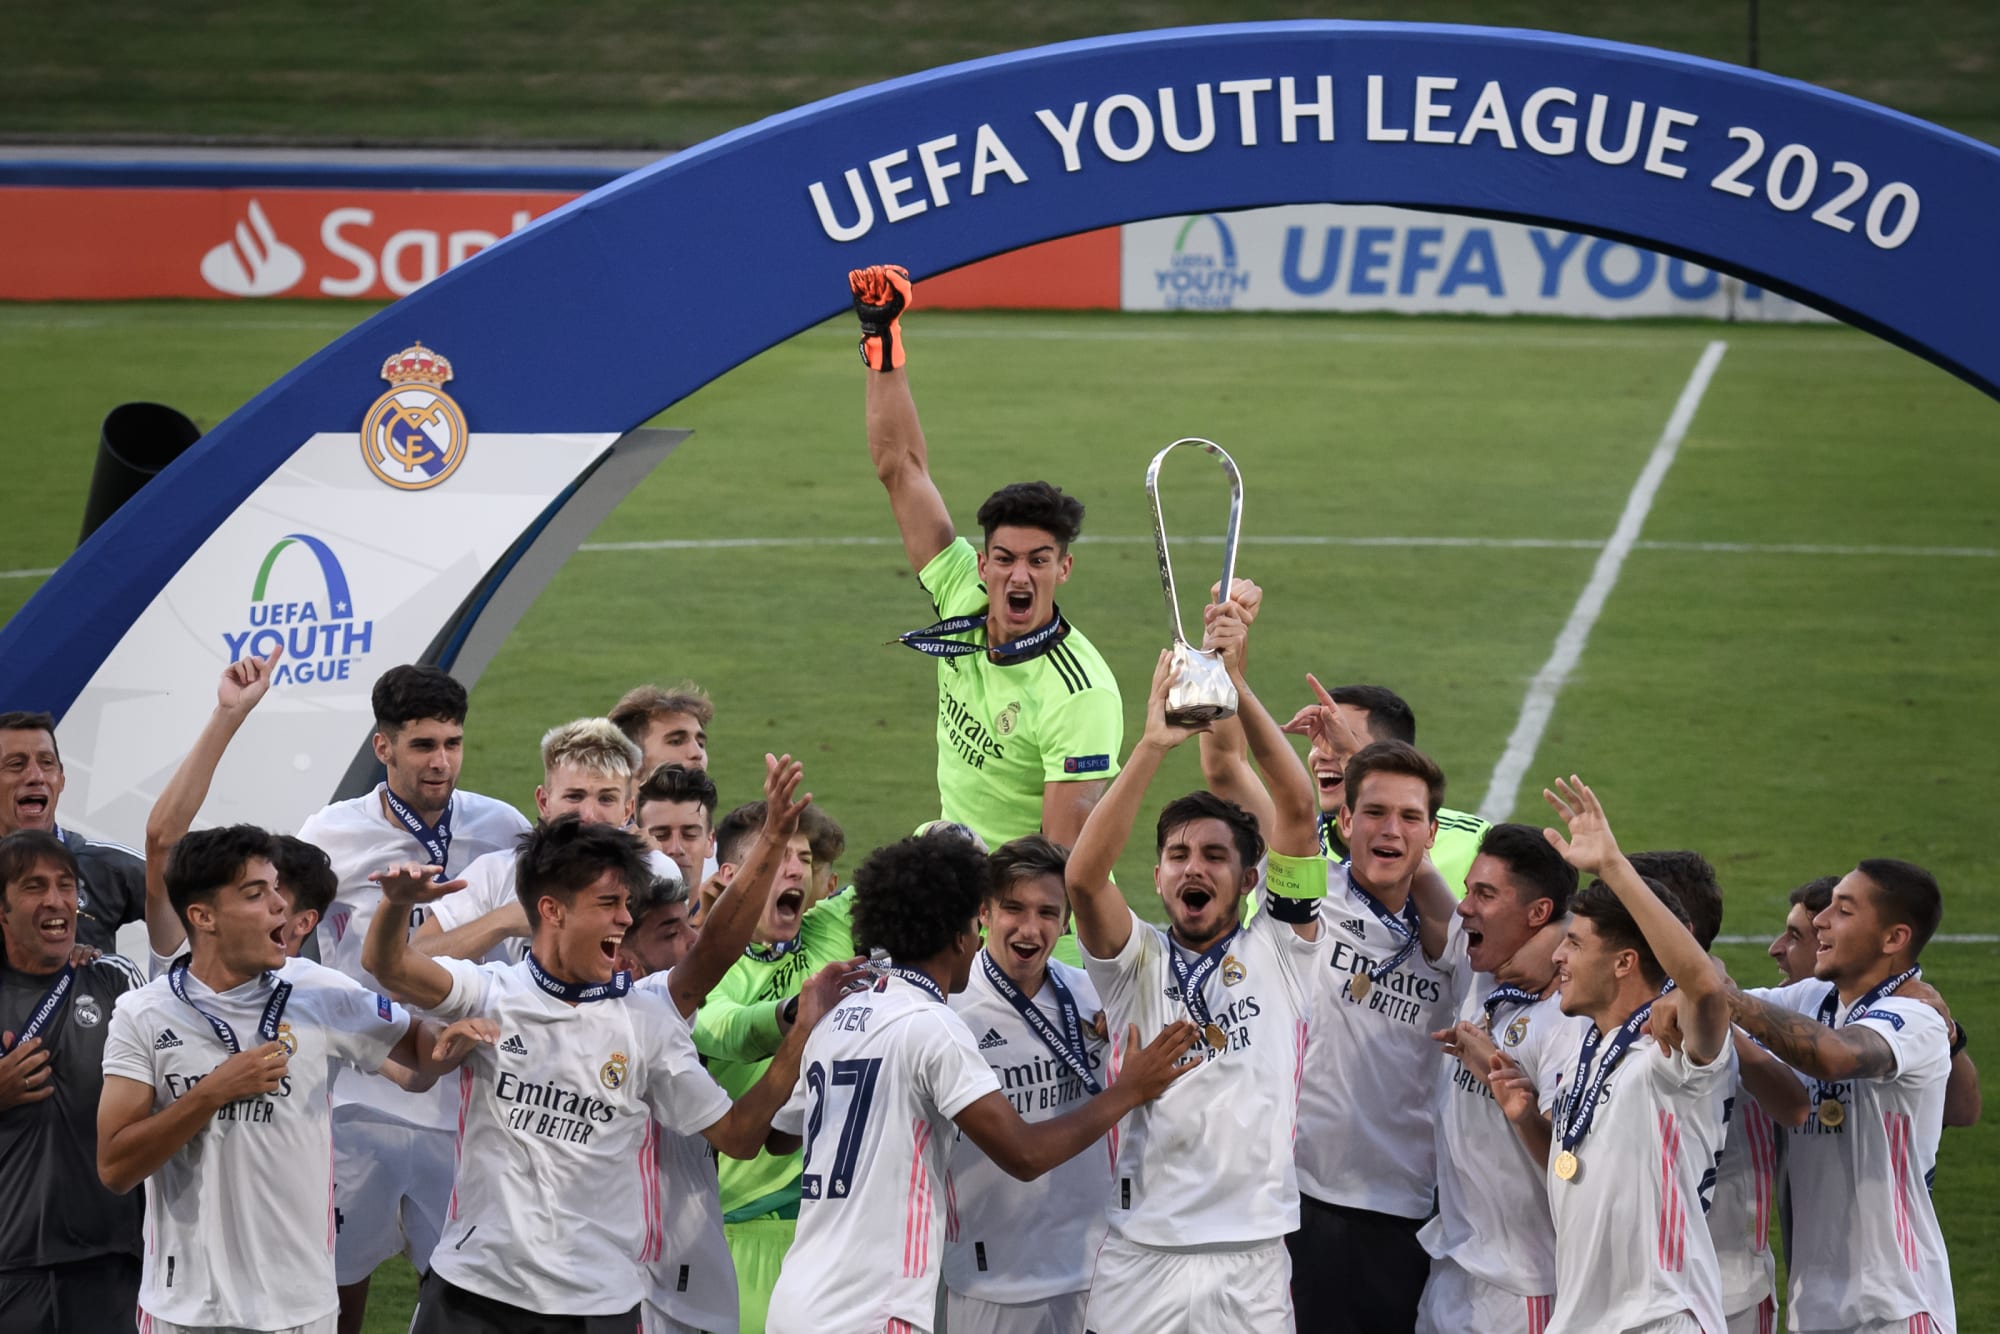 Real Madrid's U19 team has won their first UEFA Youth